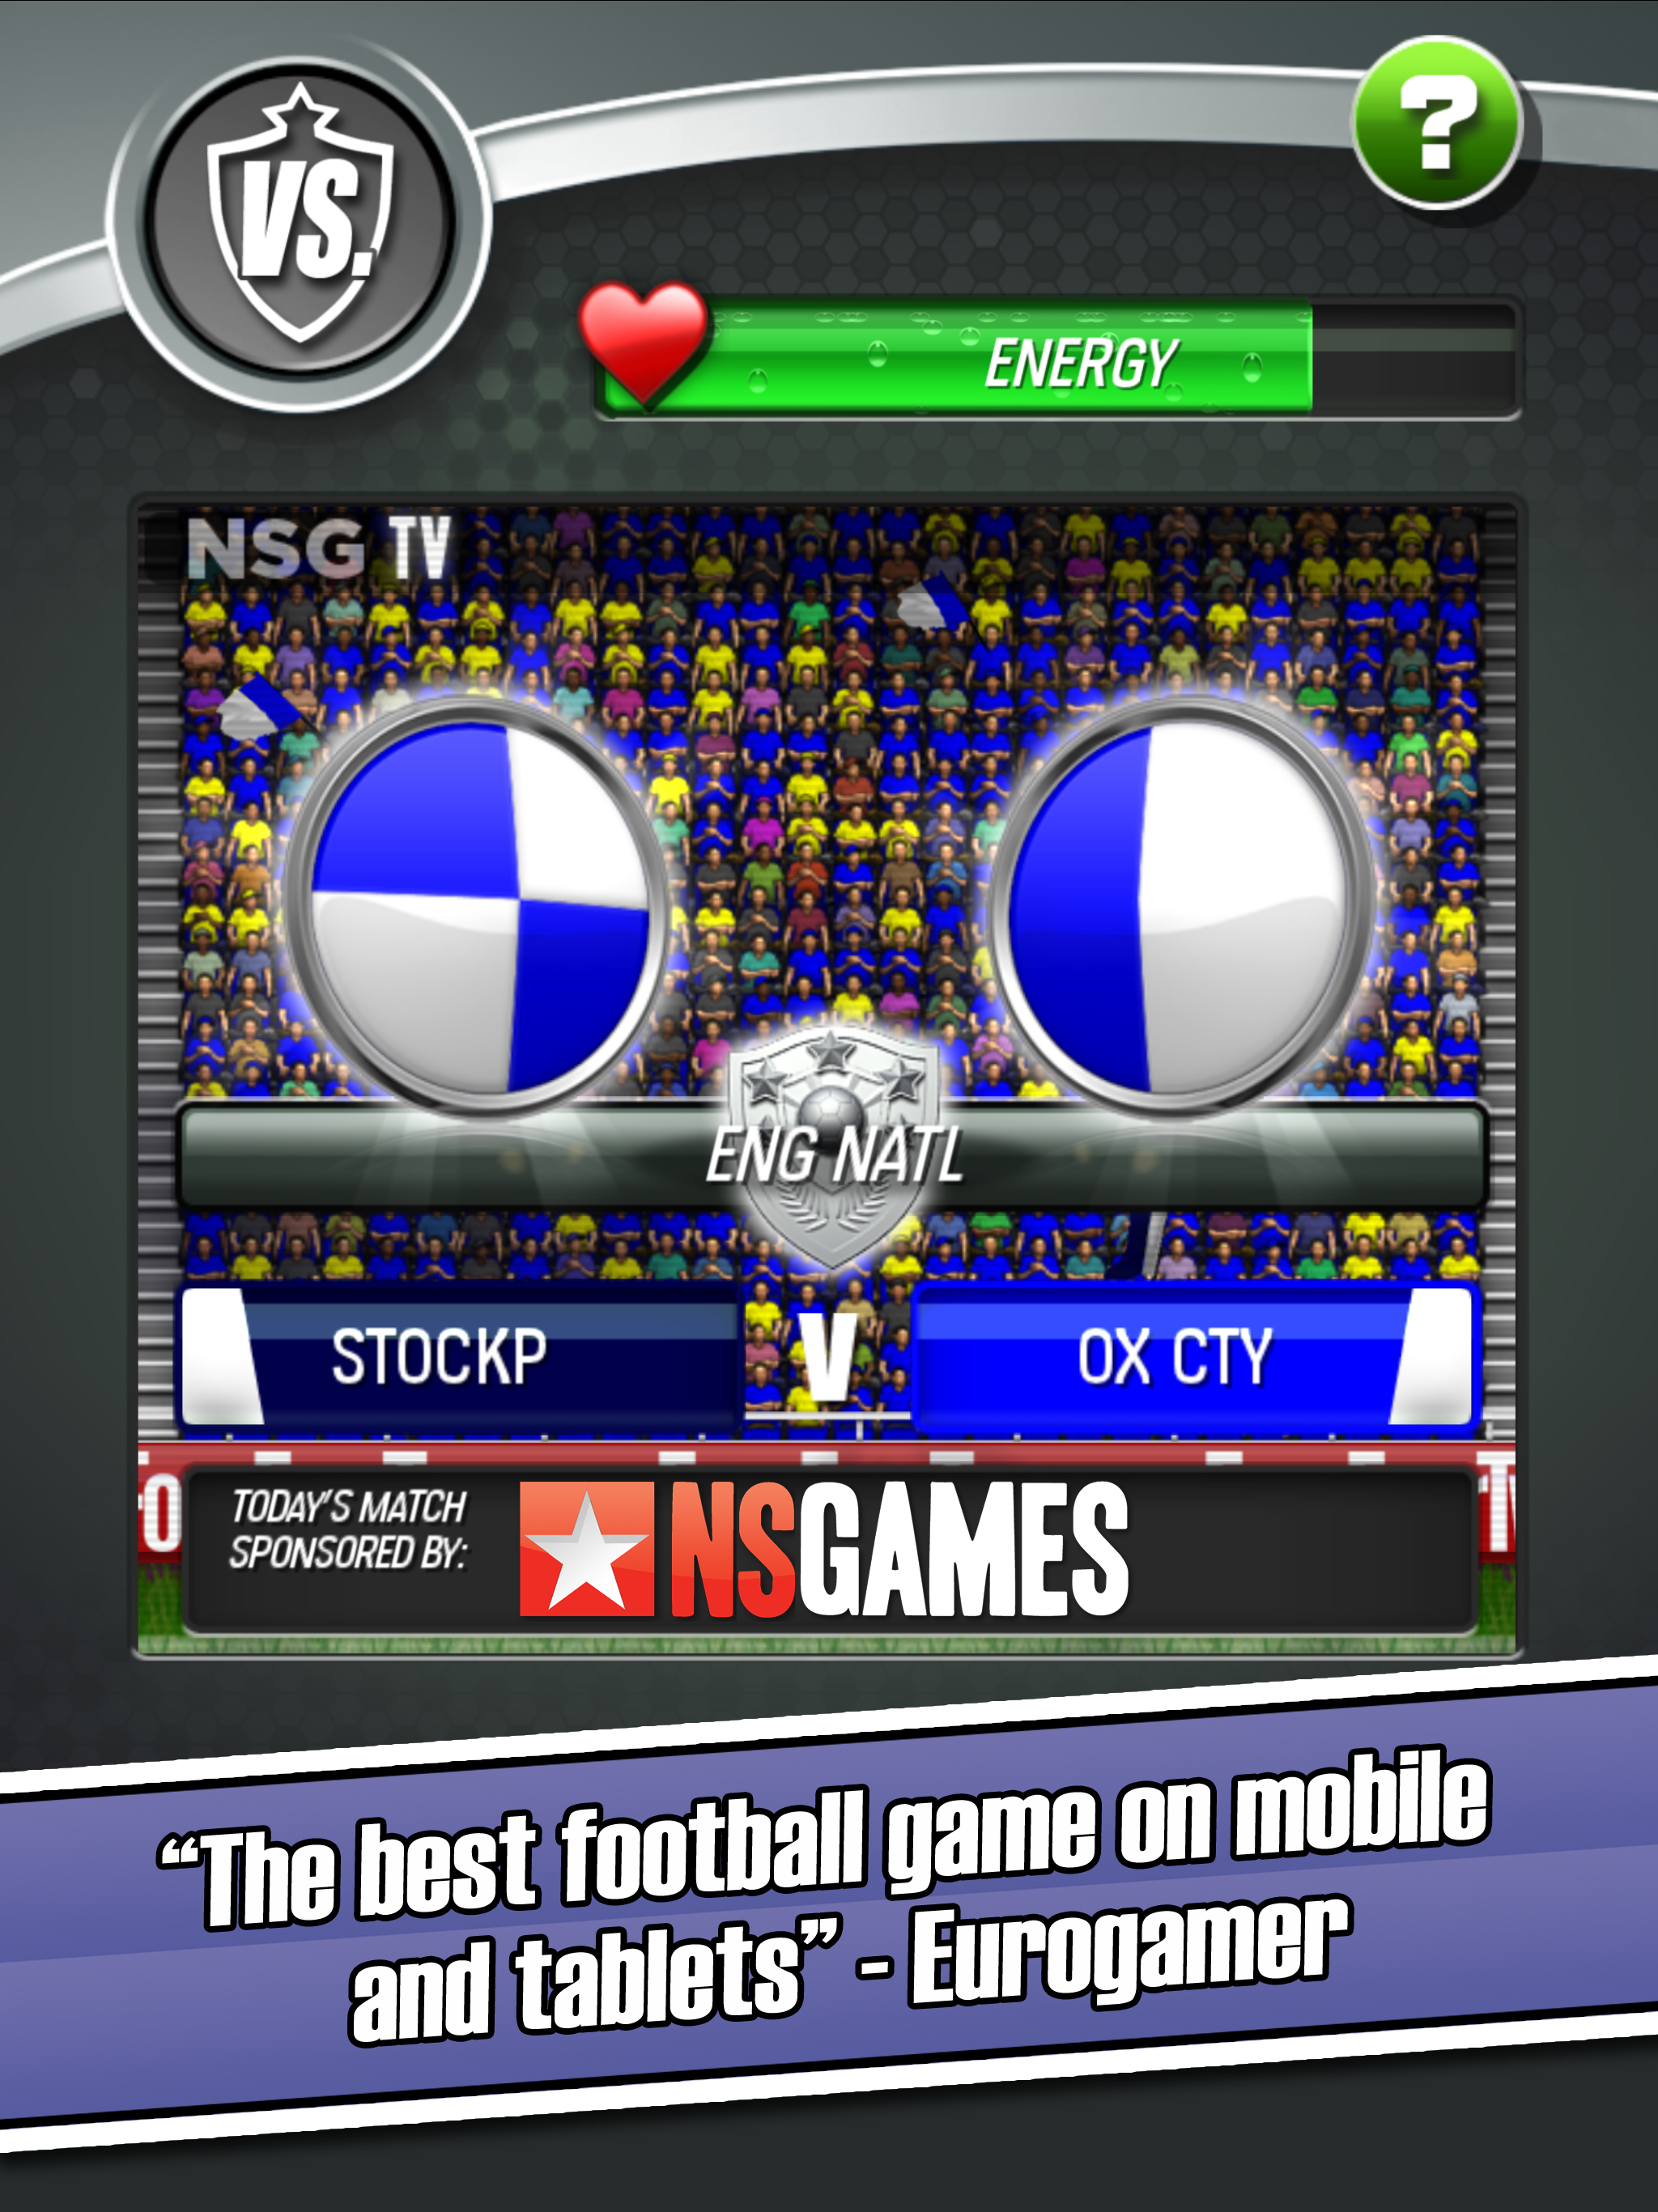 New Star Soccer screenshot game